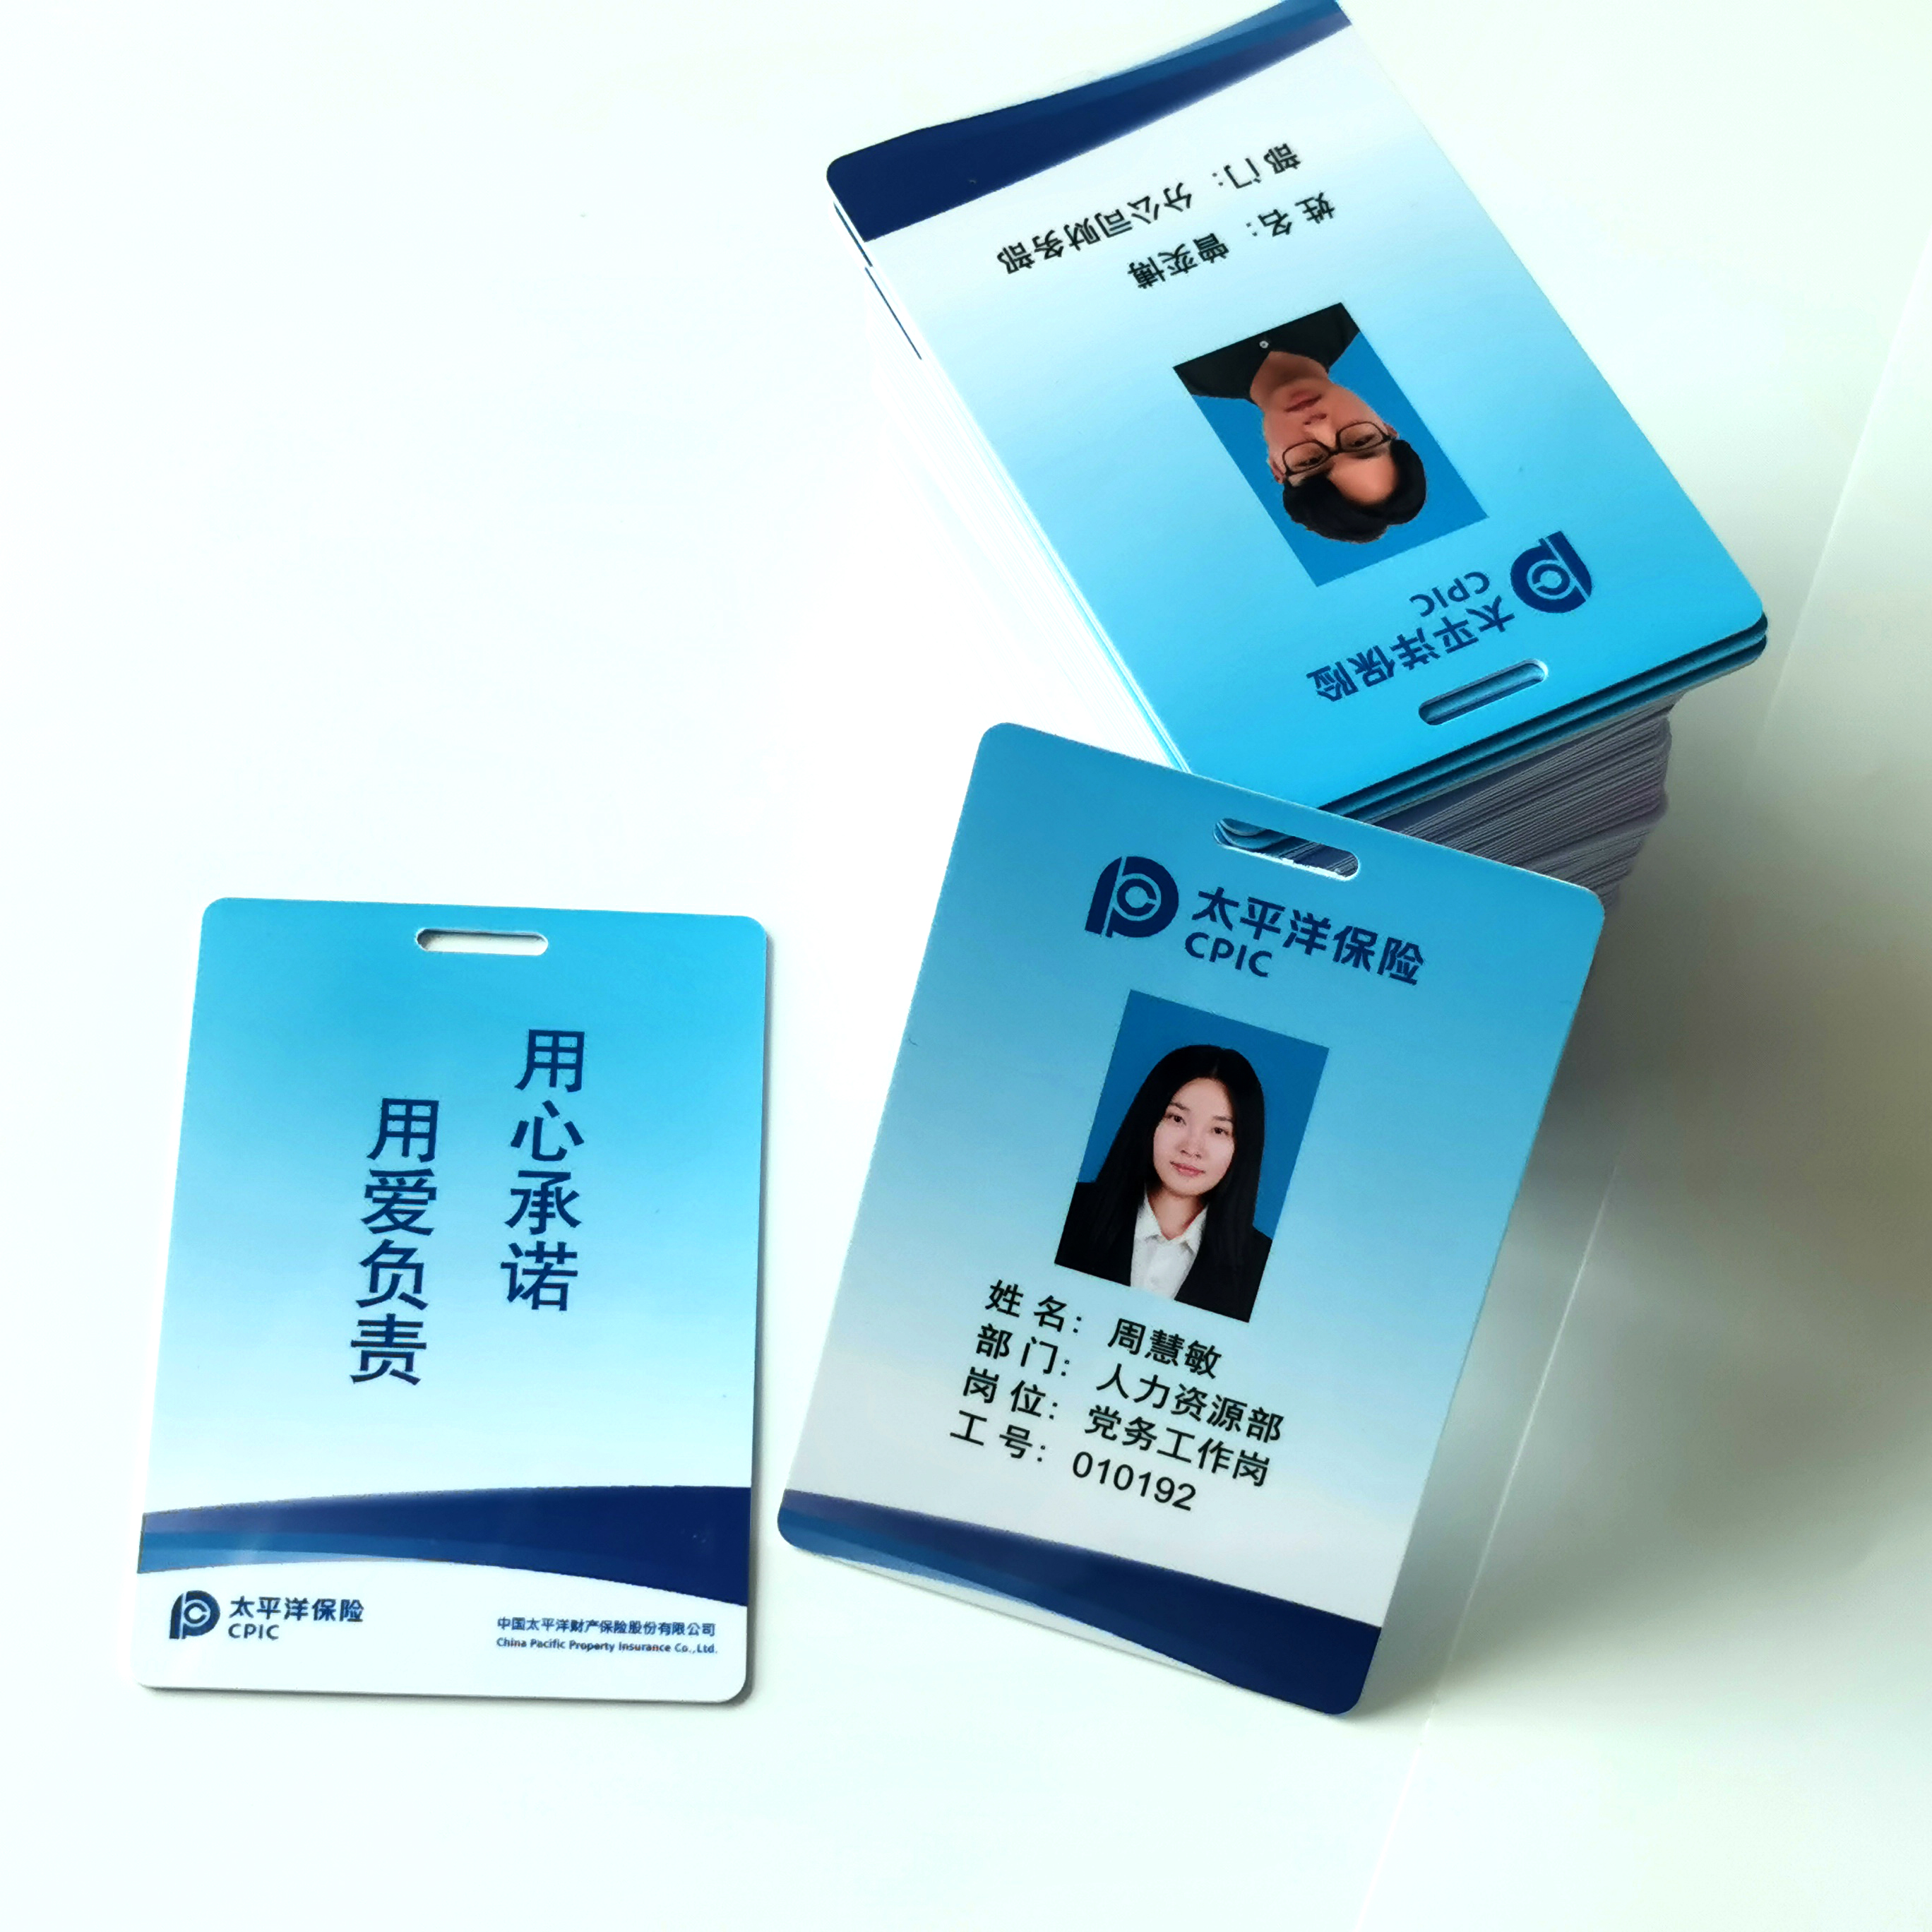 pvc人像卡工作证门禁工牌 展会证设计印刷厂家深圳市